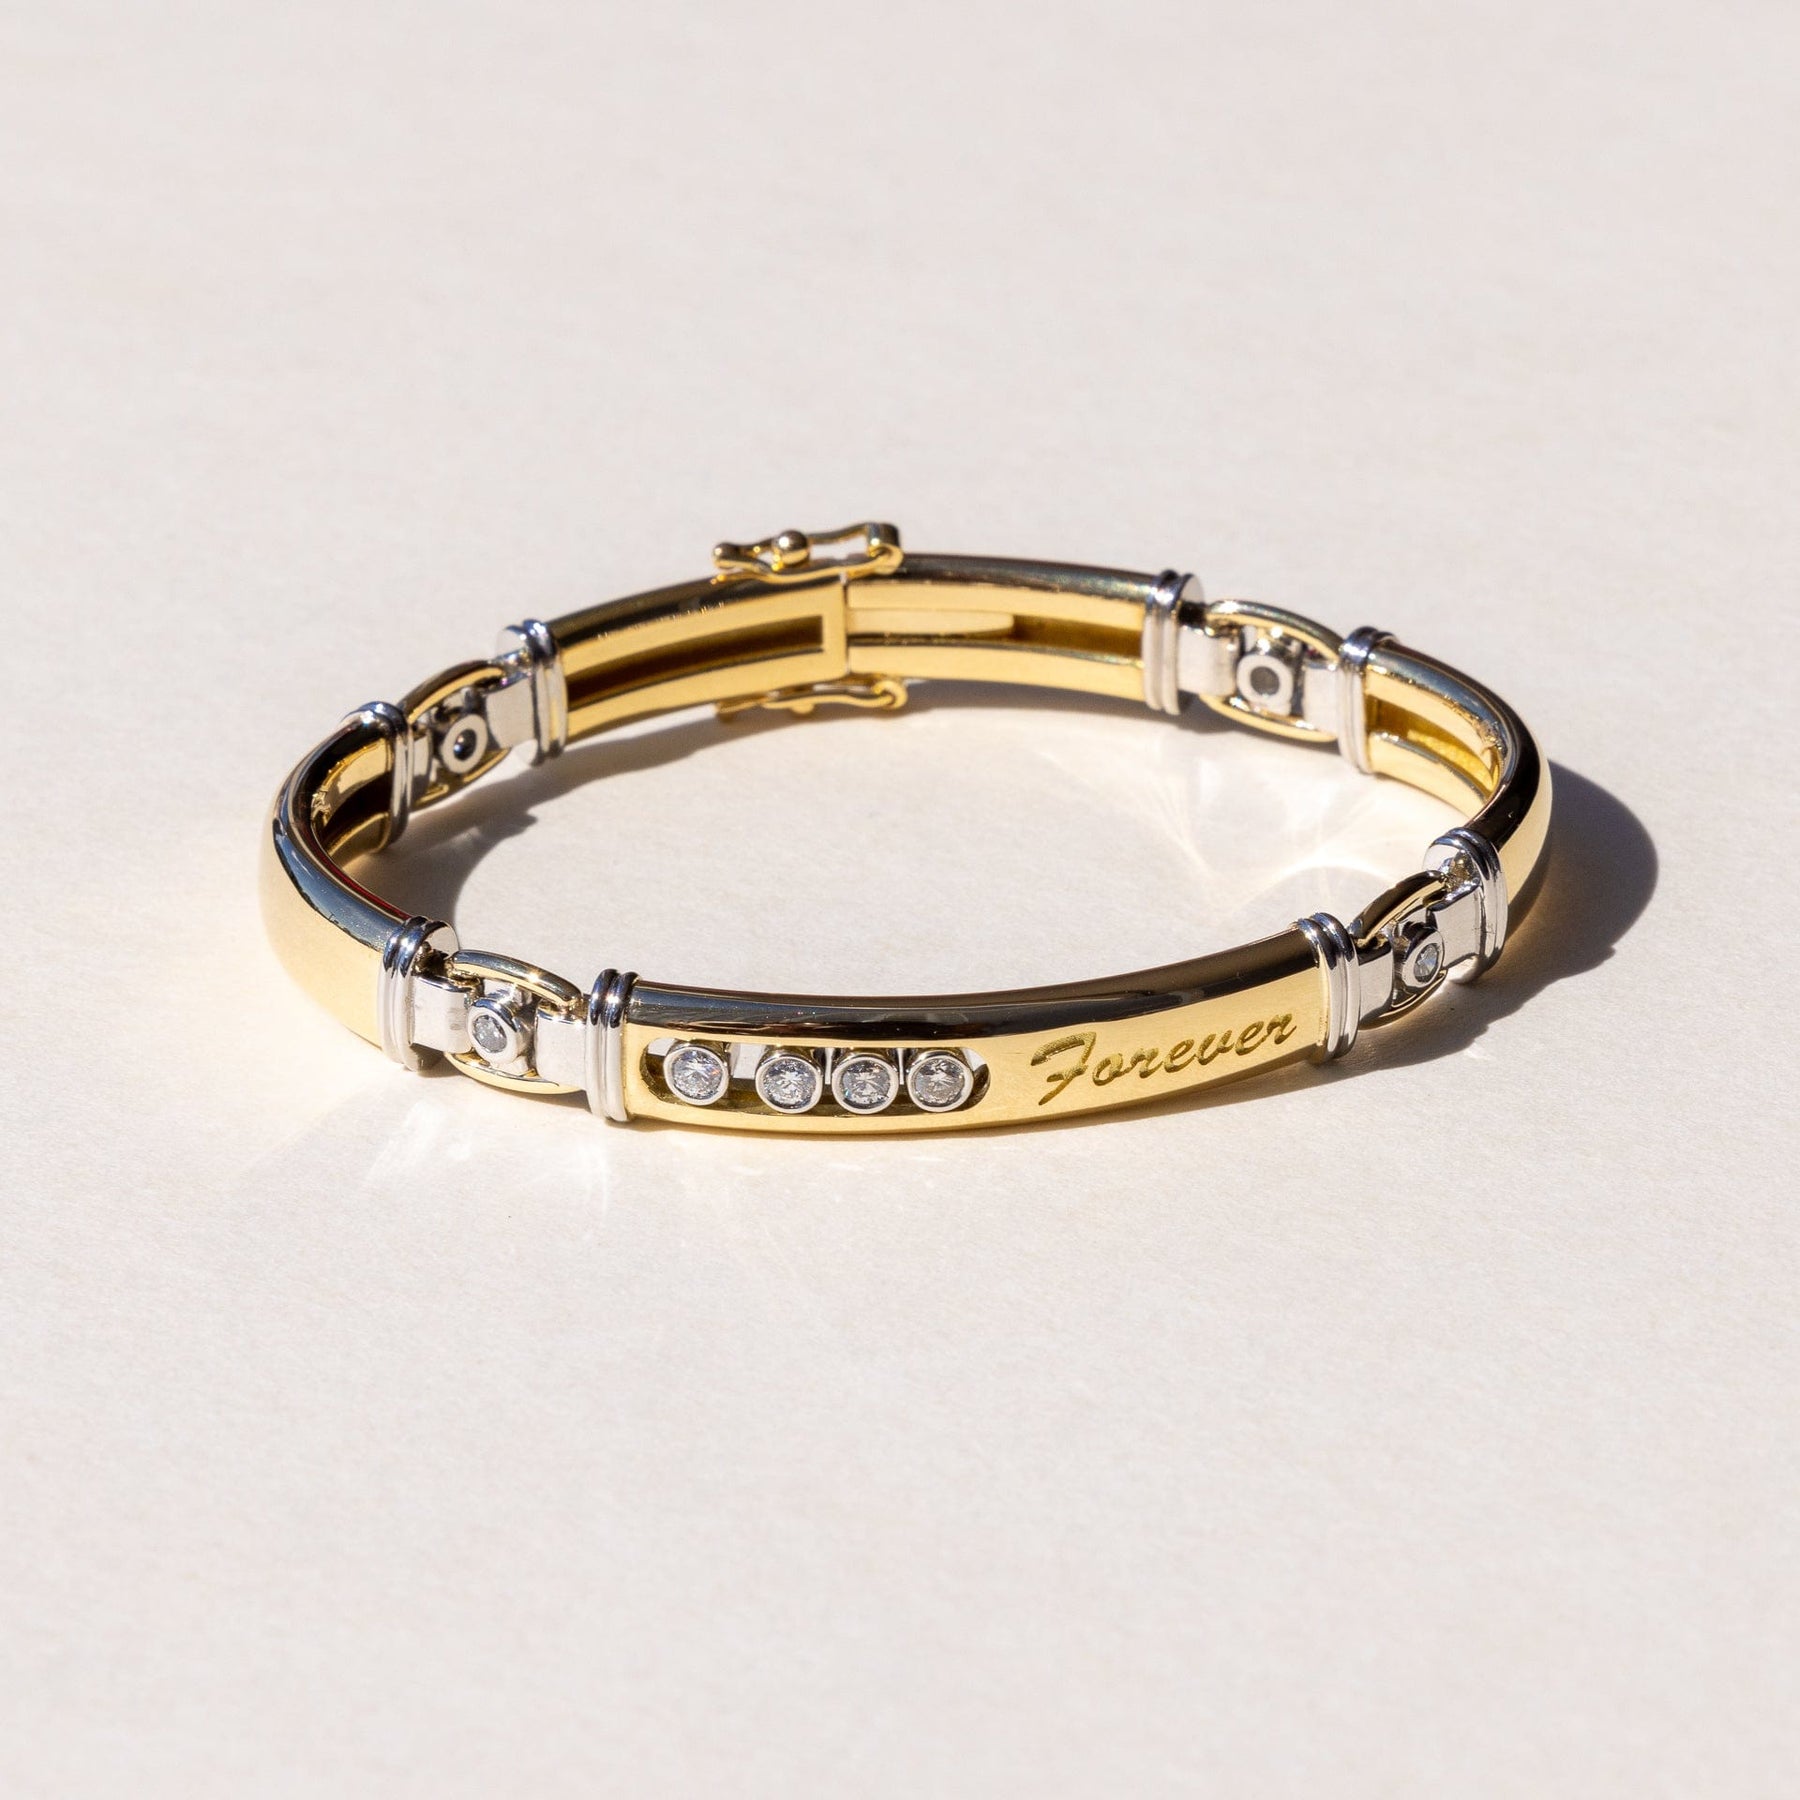 Luxury made to order Diamond sliding hinge bracelet in 18k Yellow Gold